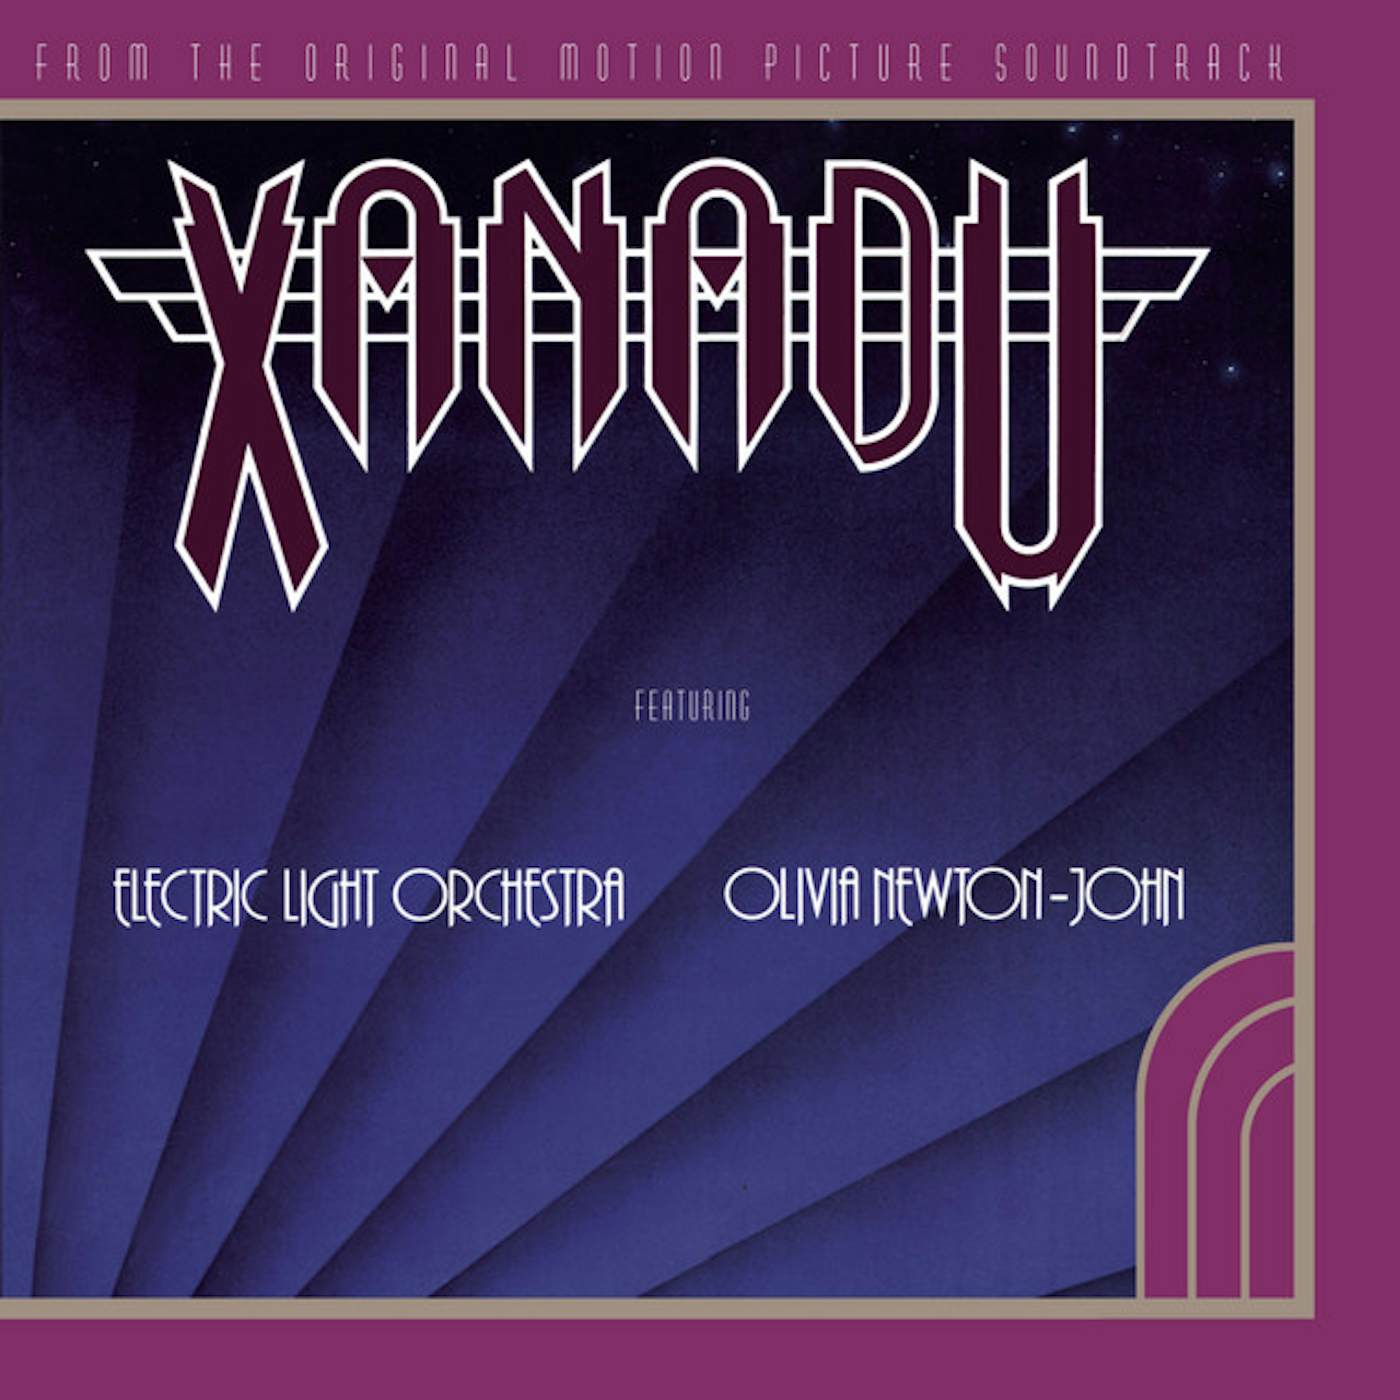 ELO (Electric Light Orchestra) XANADU - Original Soundtrack CD